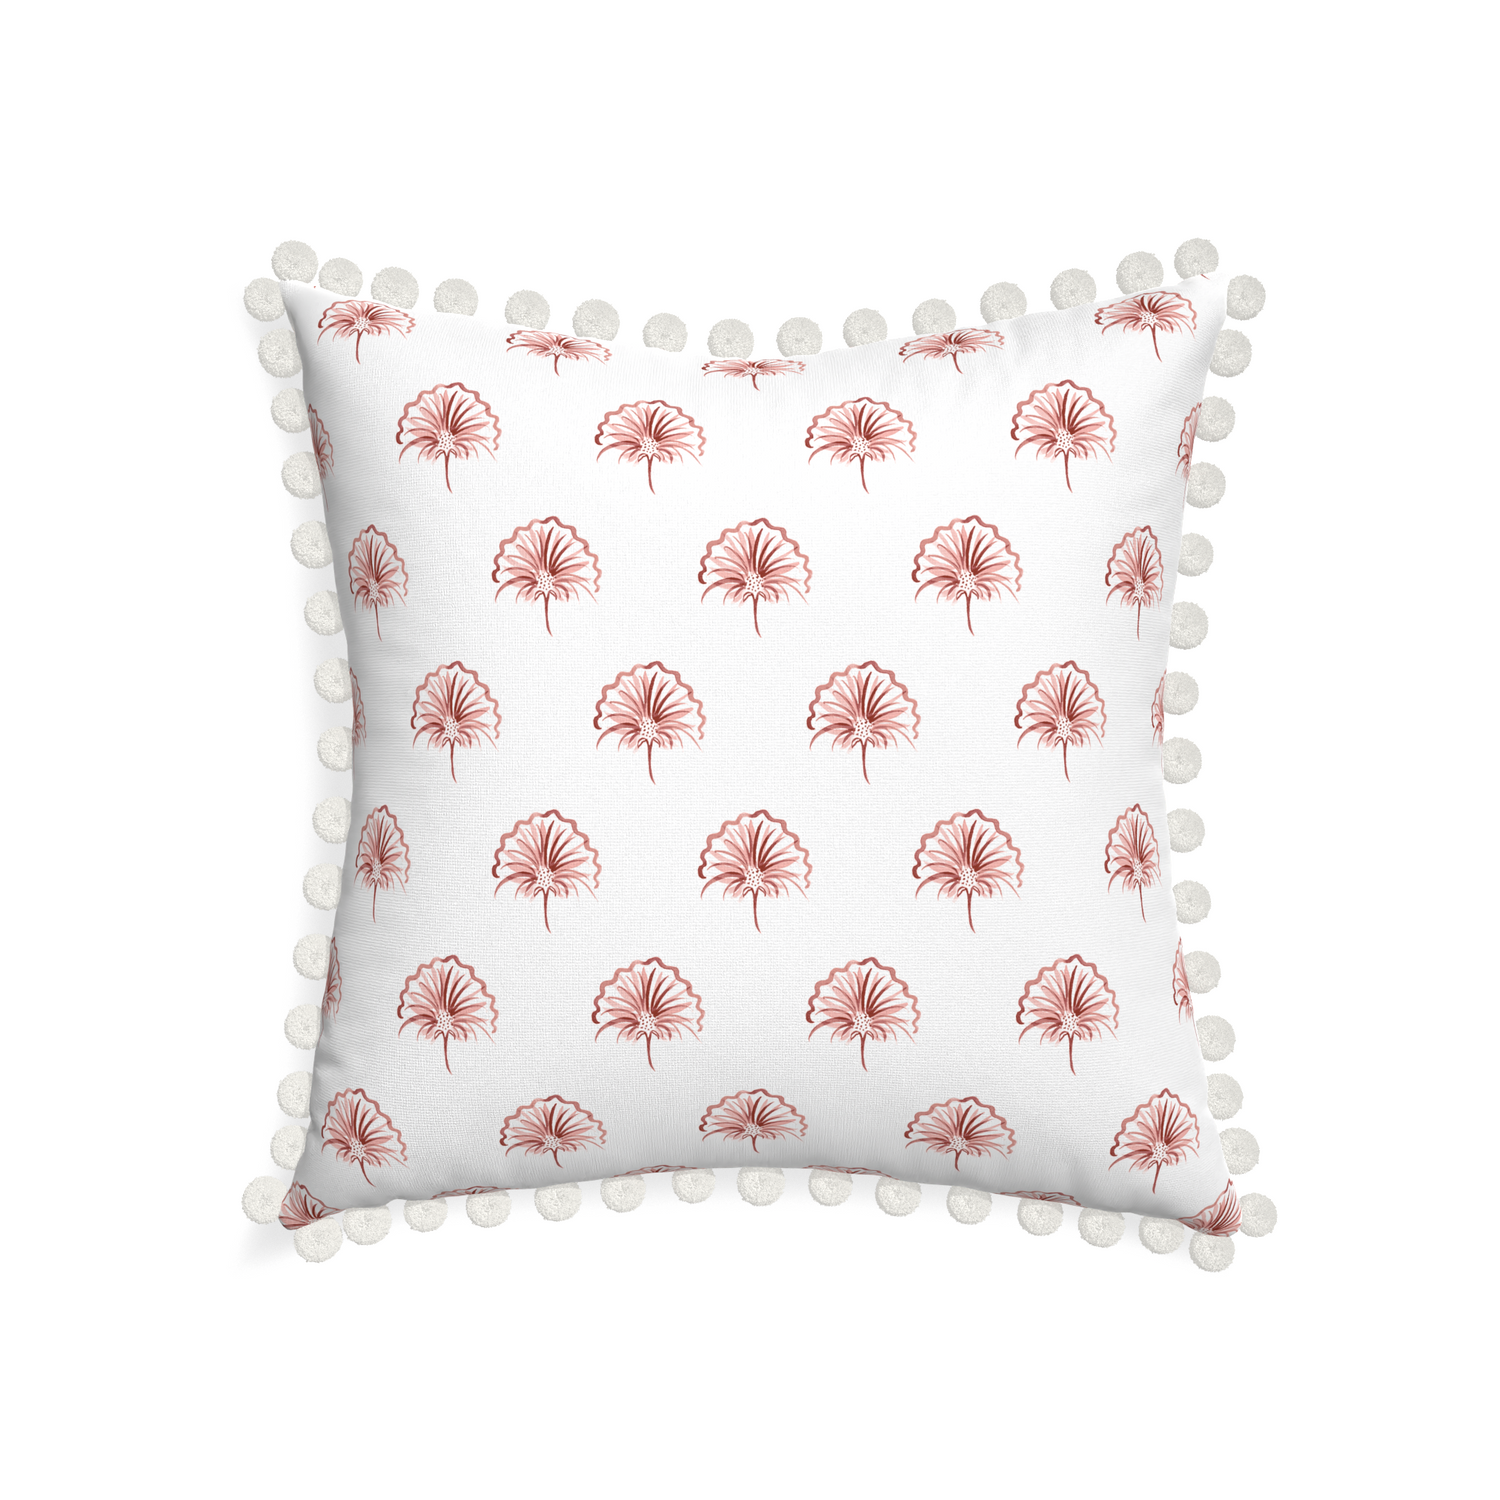 22-square penelope rose custom pillow with snow pom pom on white background